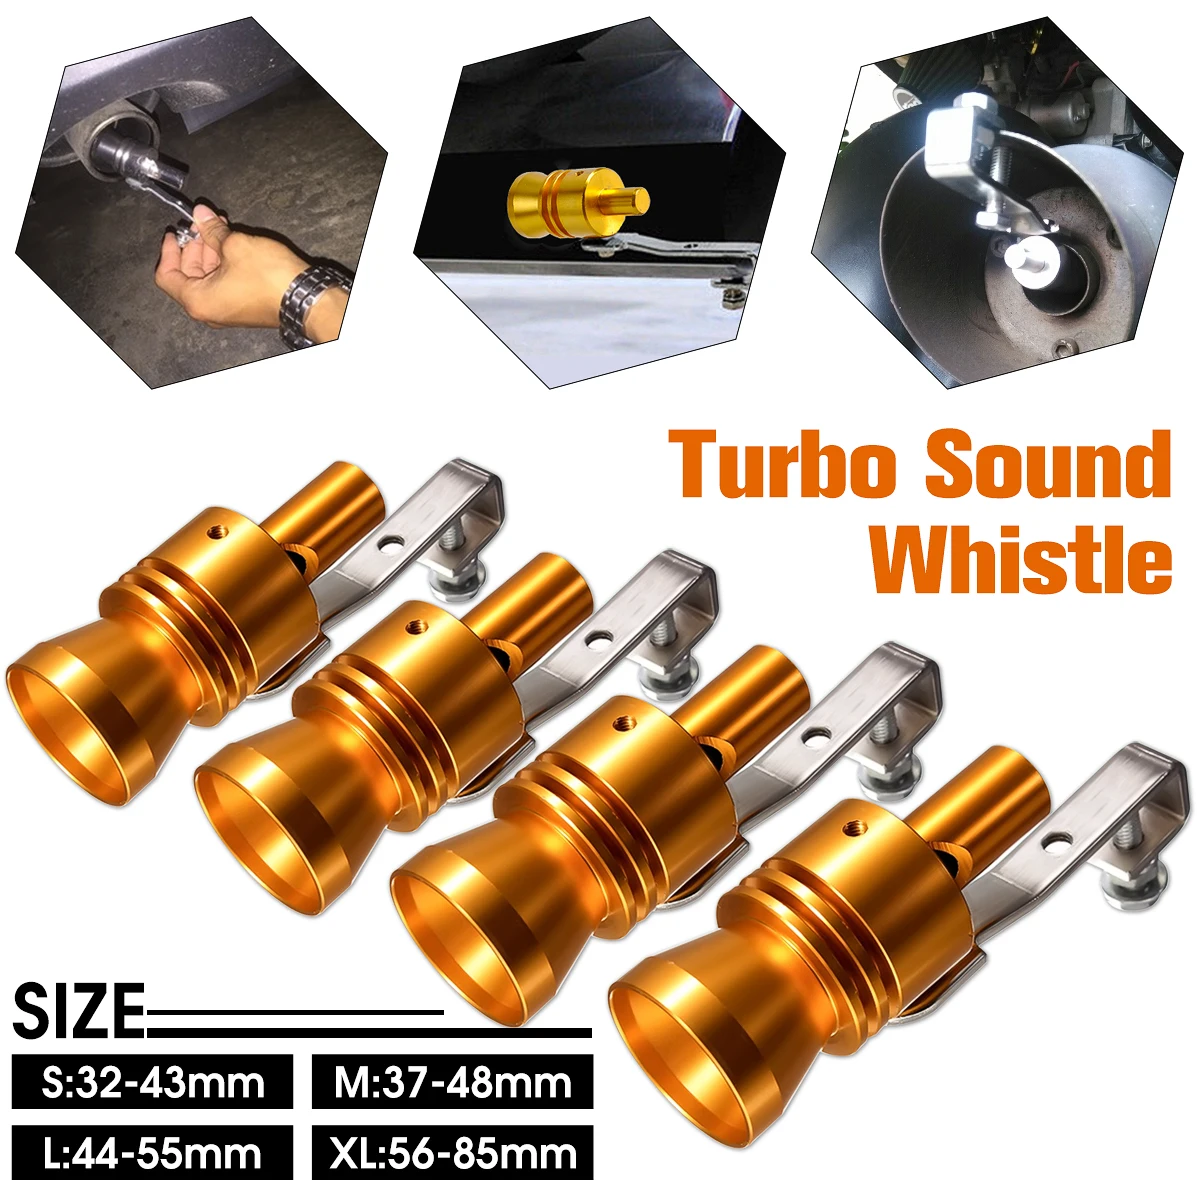 

Gold Motorbike Car Exhaust Fake Turbo Whistle Pipe Sound Muffler Blow Off Valve Bov Universal Simulator Whistler S/M/L/XL